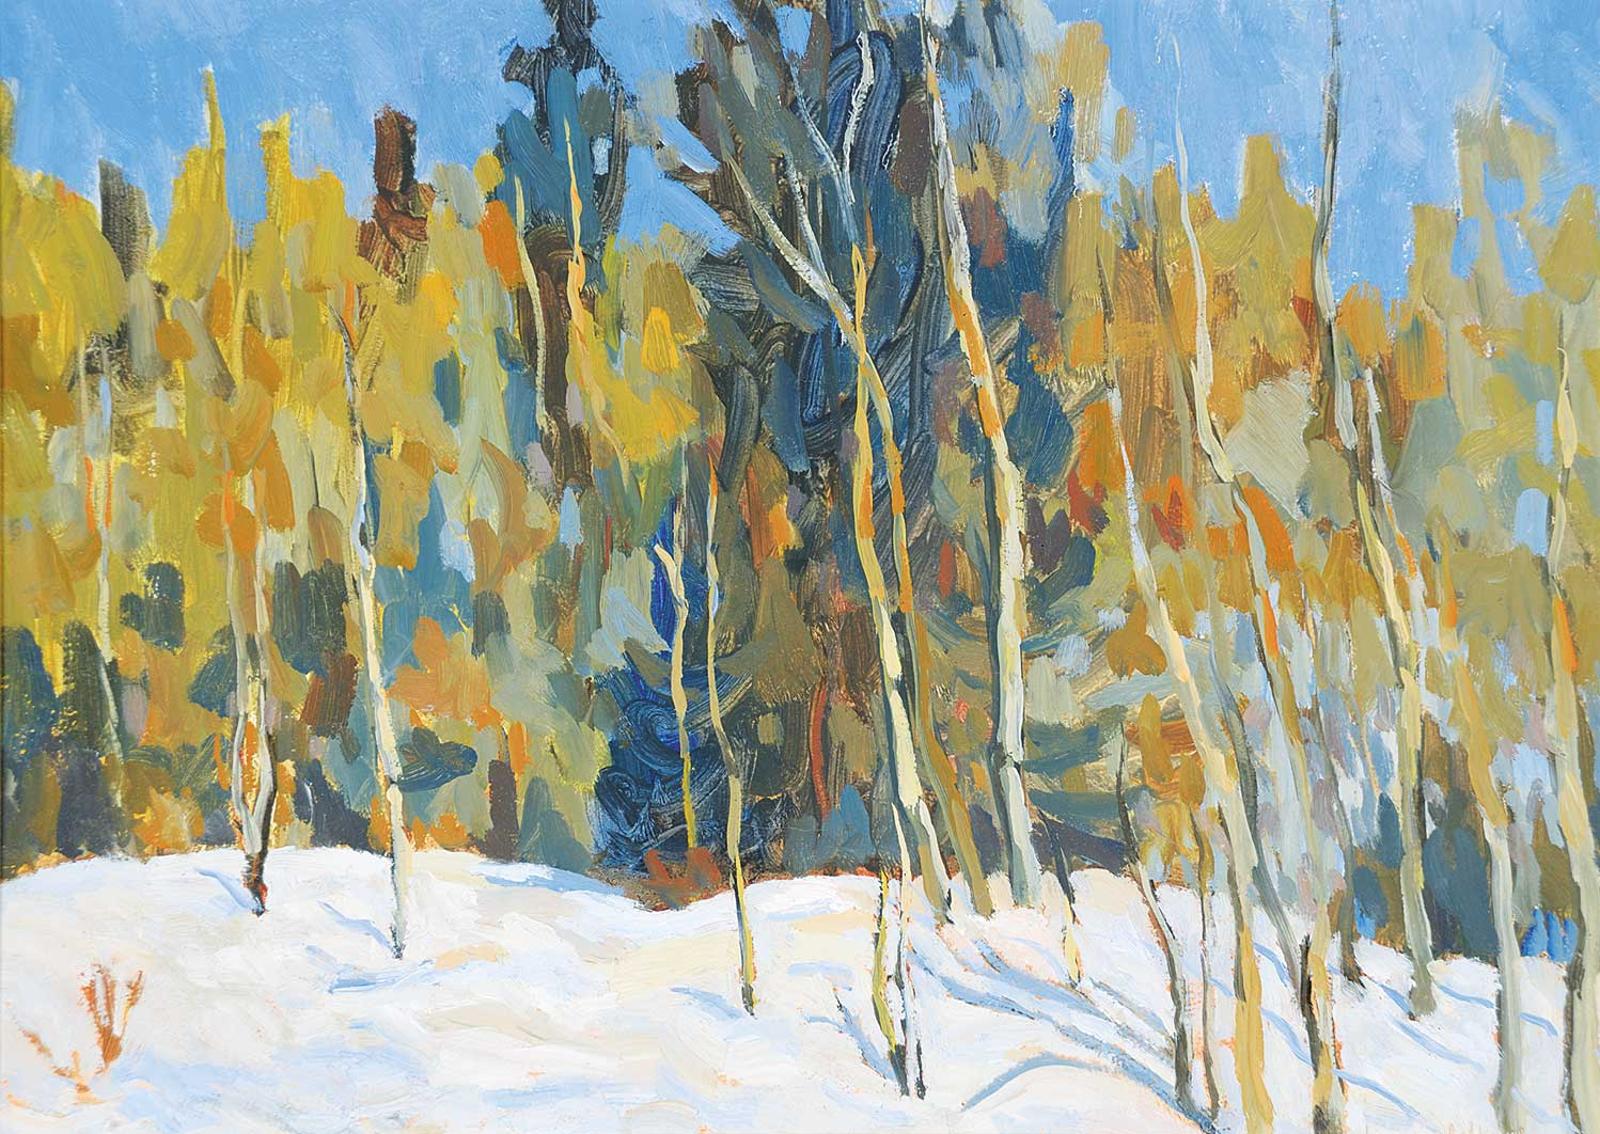 Joan Van Belkum (1928-2014) - Brushes and Evergreens in Snow, Cypress Hills